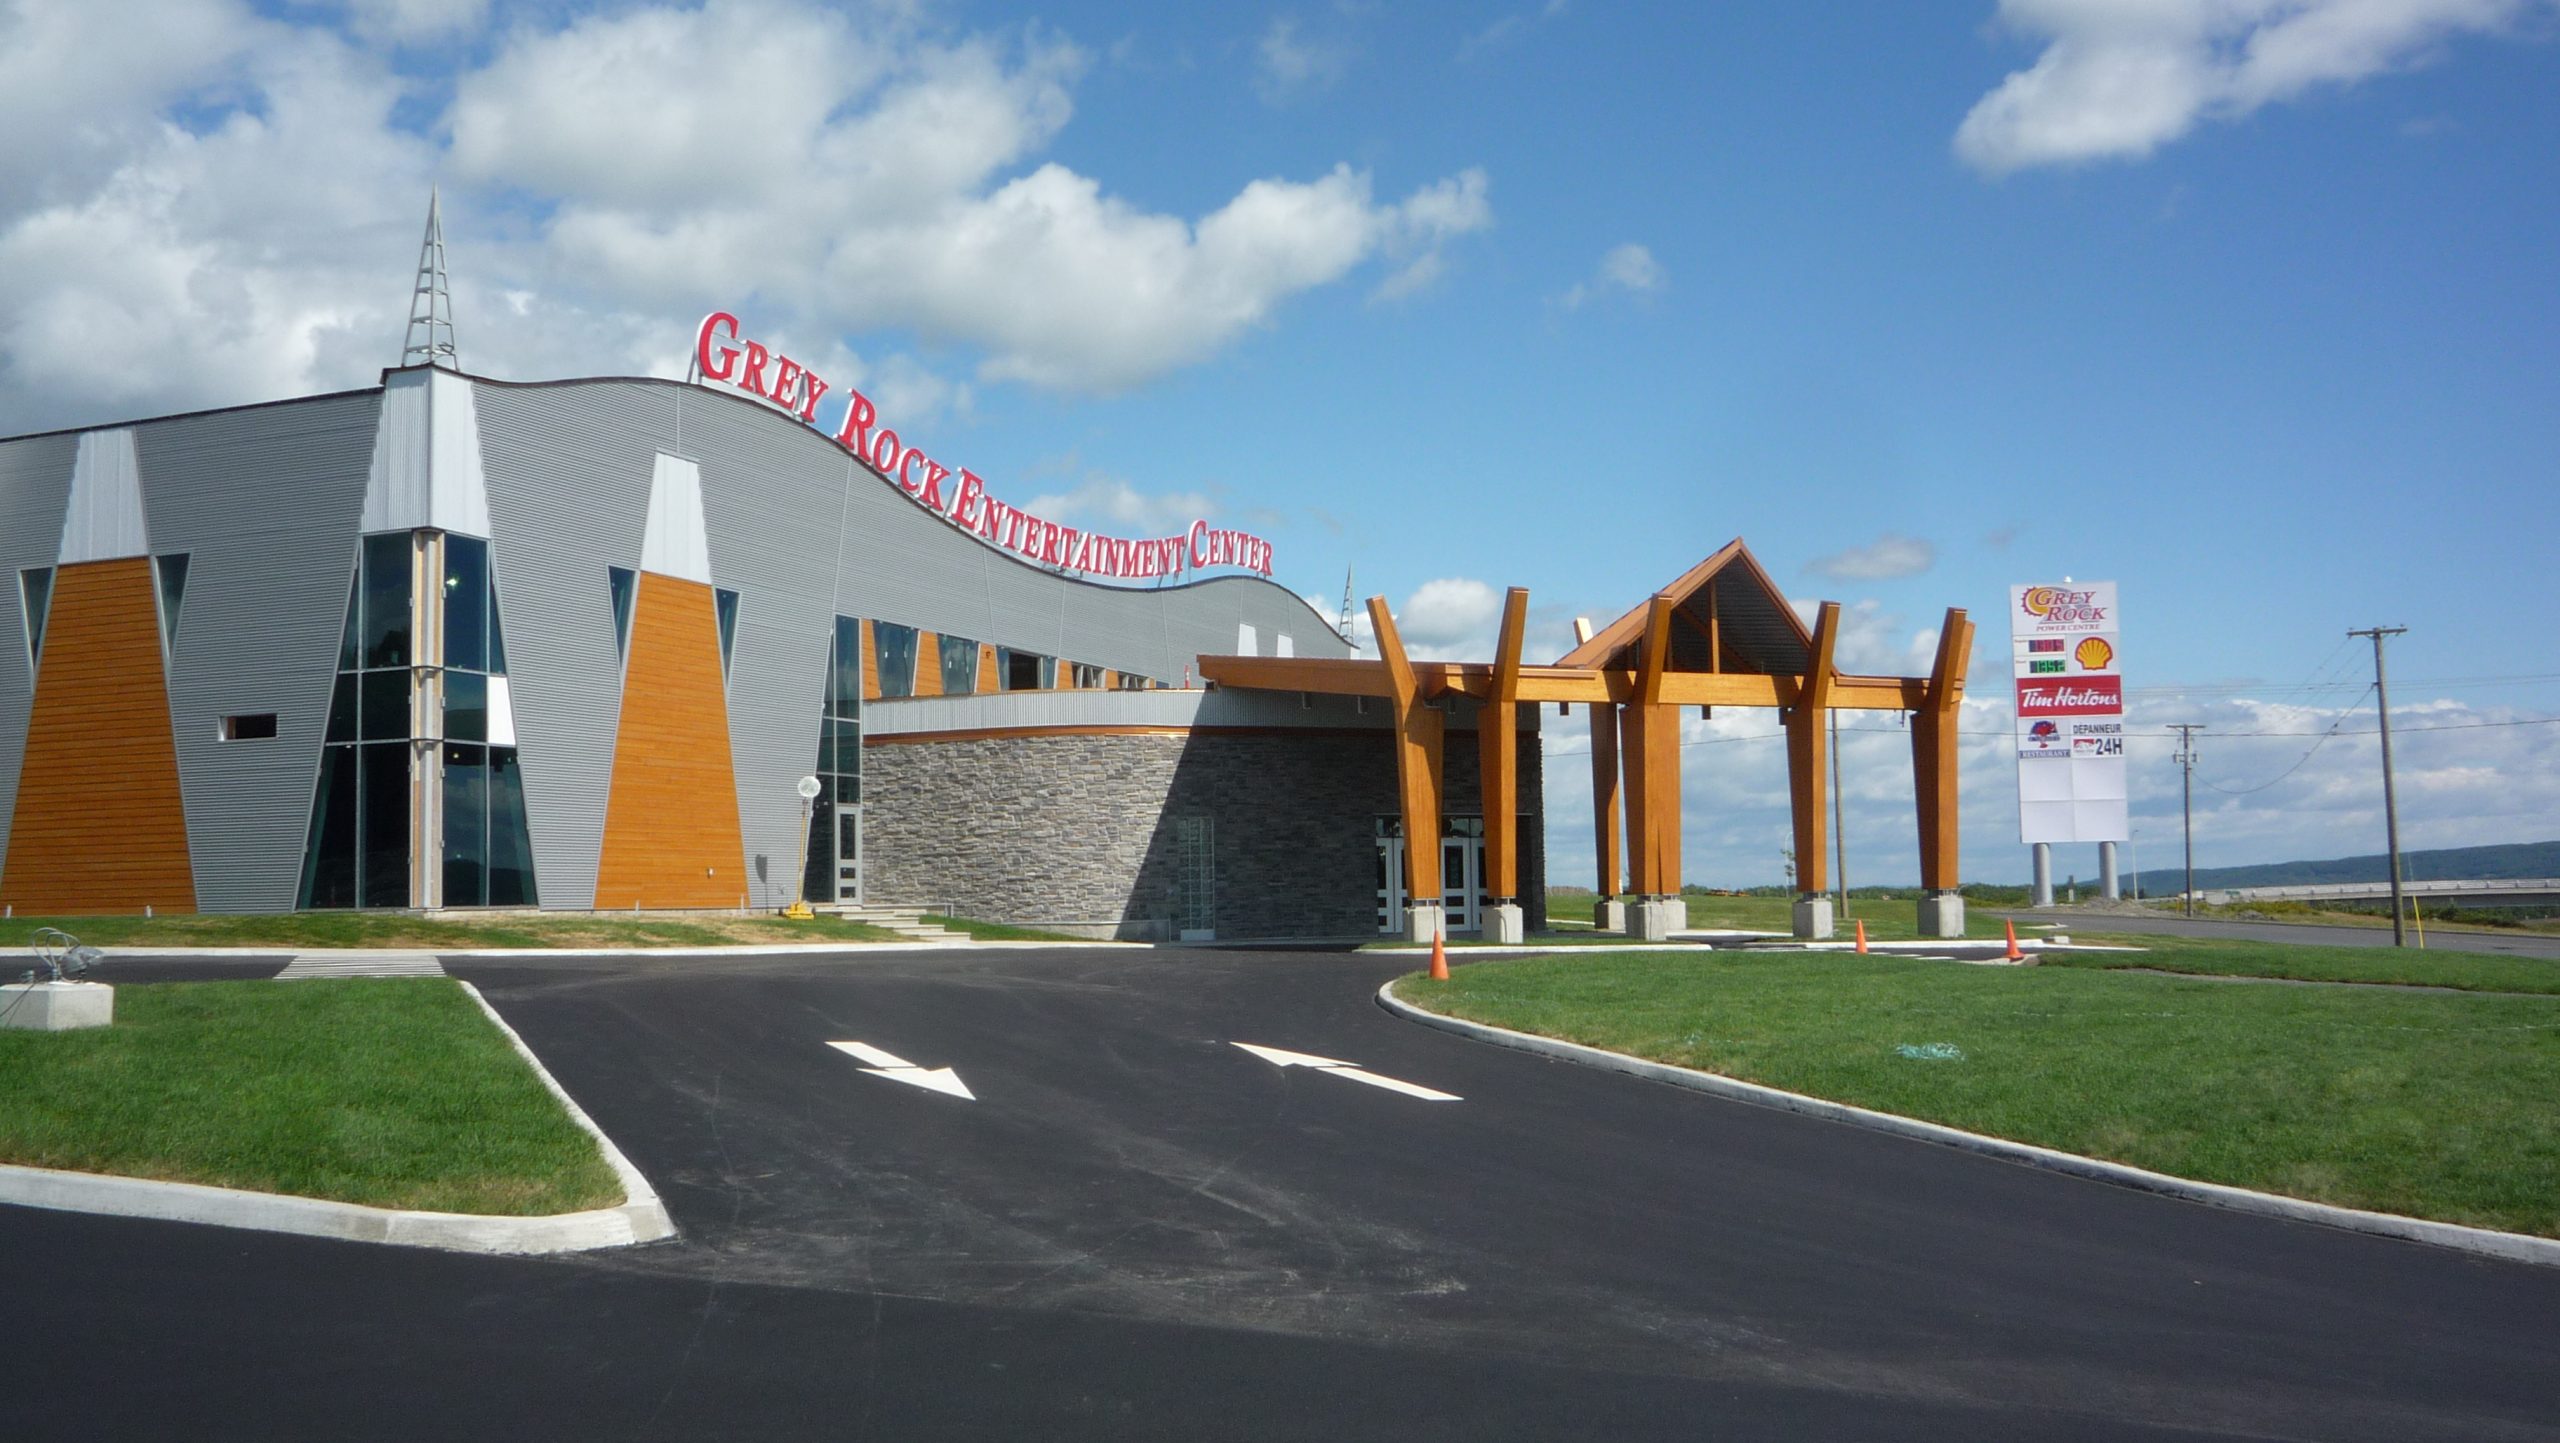 'Grey Rock Entertainment Center Cecobois 